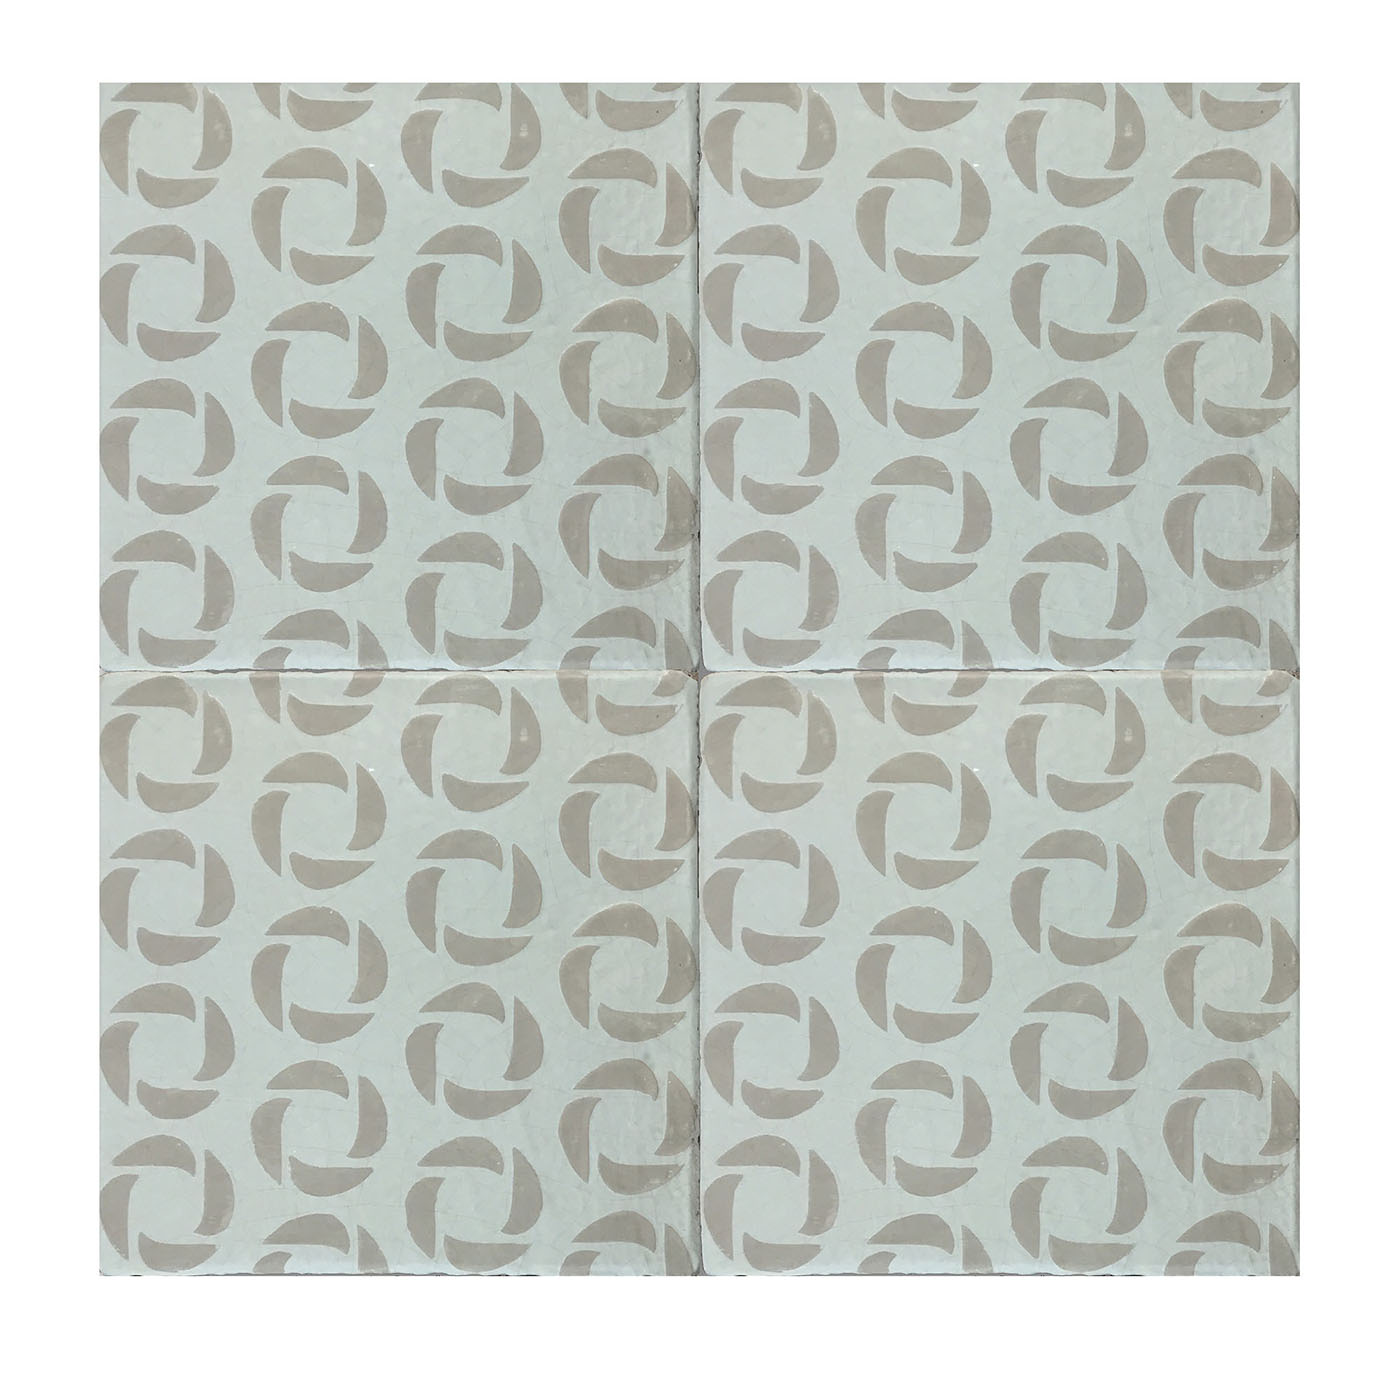 Daamè Set of 25 Square Gray Tiles #3 - Main view